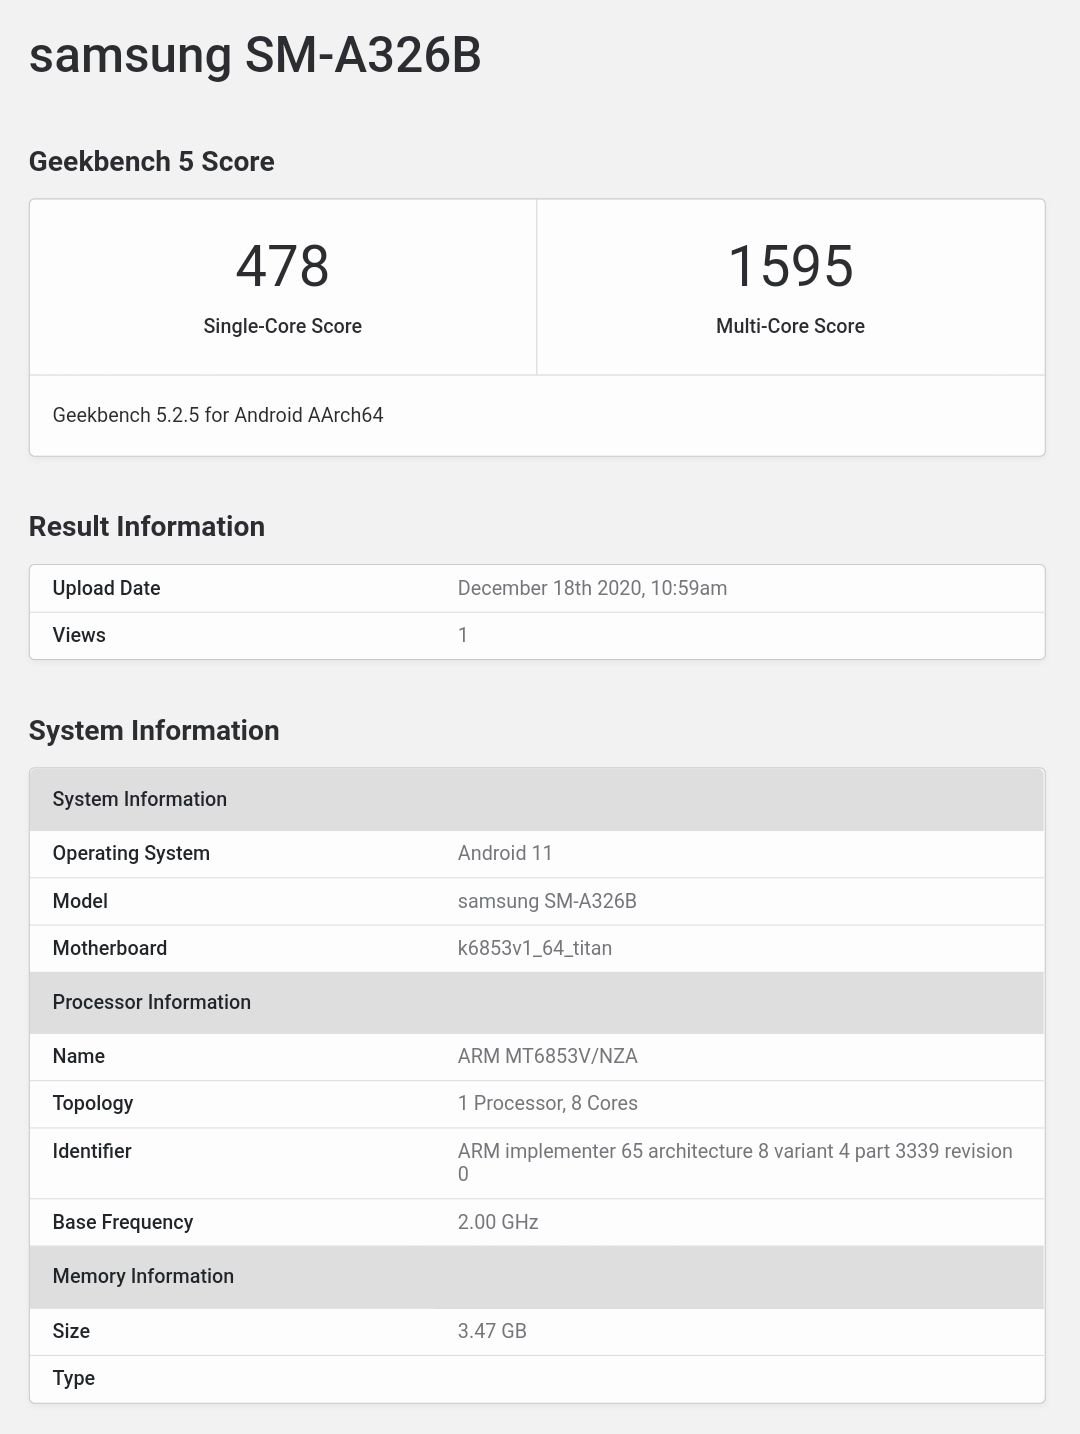 Samsung Galaxy A32 5G avec Dimensity 720 et Android 11 OS apparaissent sur Geekbench